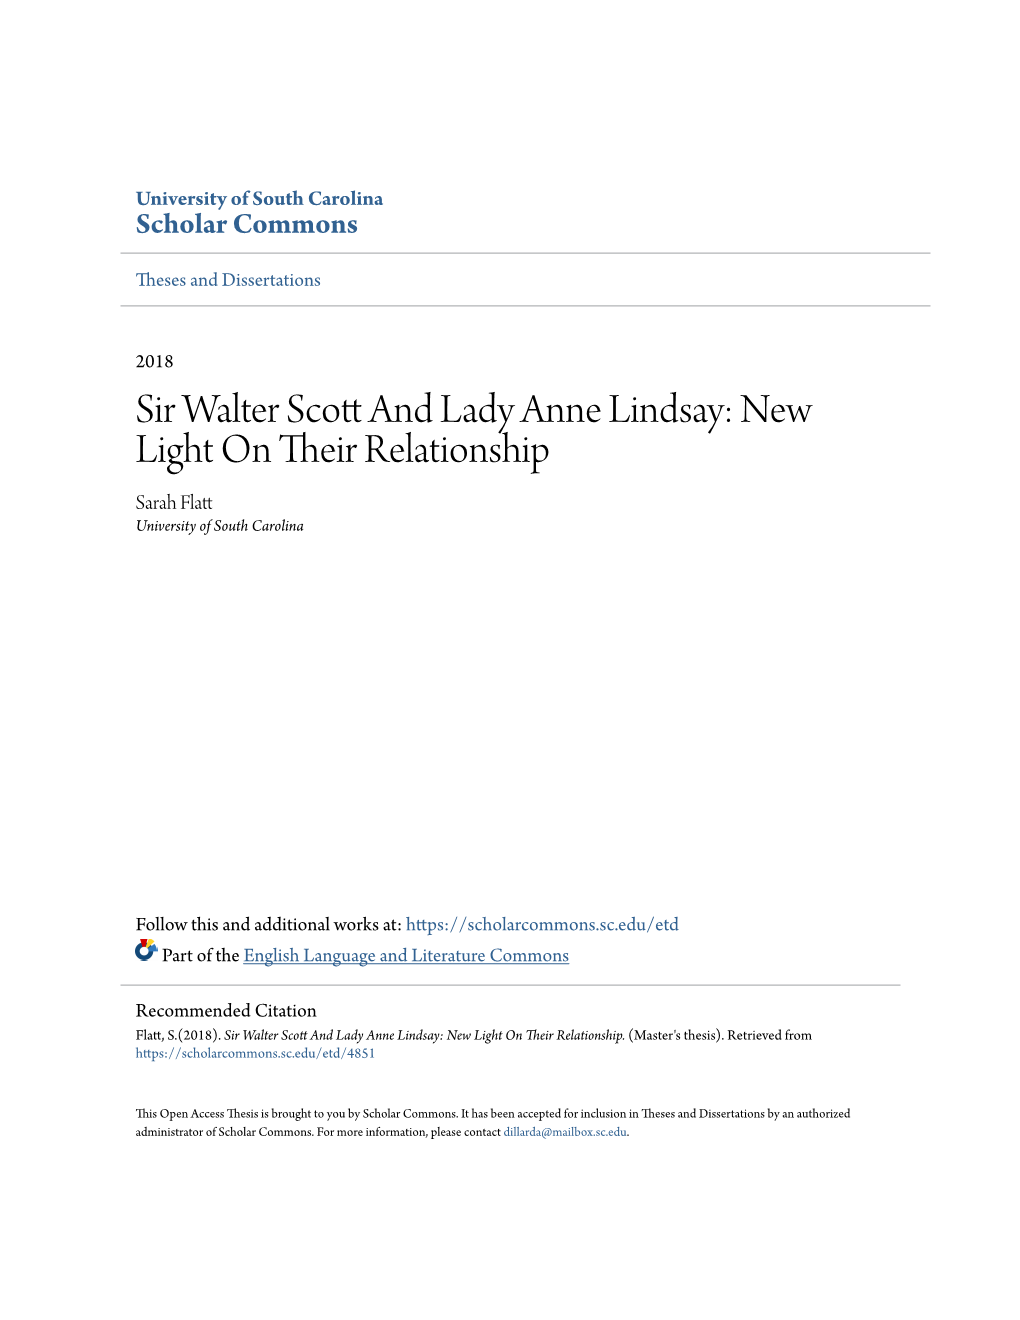 Sir Walter Scott and Lady Anne Lindsay: New Light on Their Relationship Sarah Flatt University of South Carolina